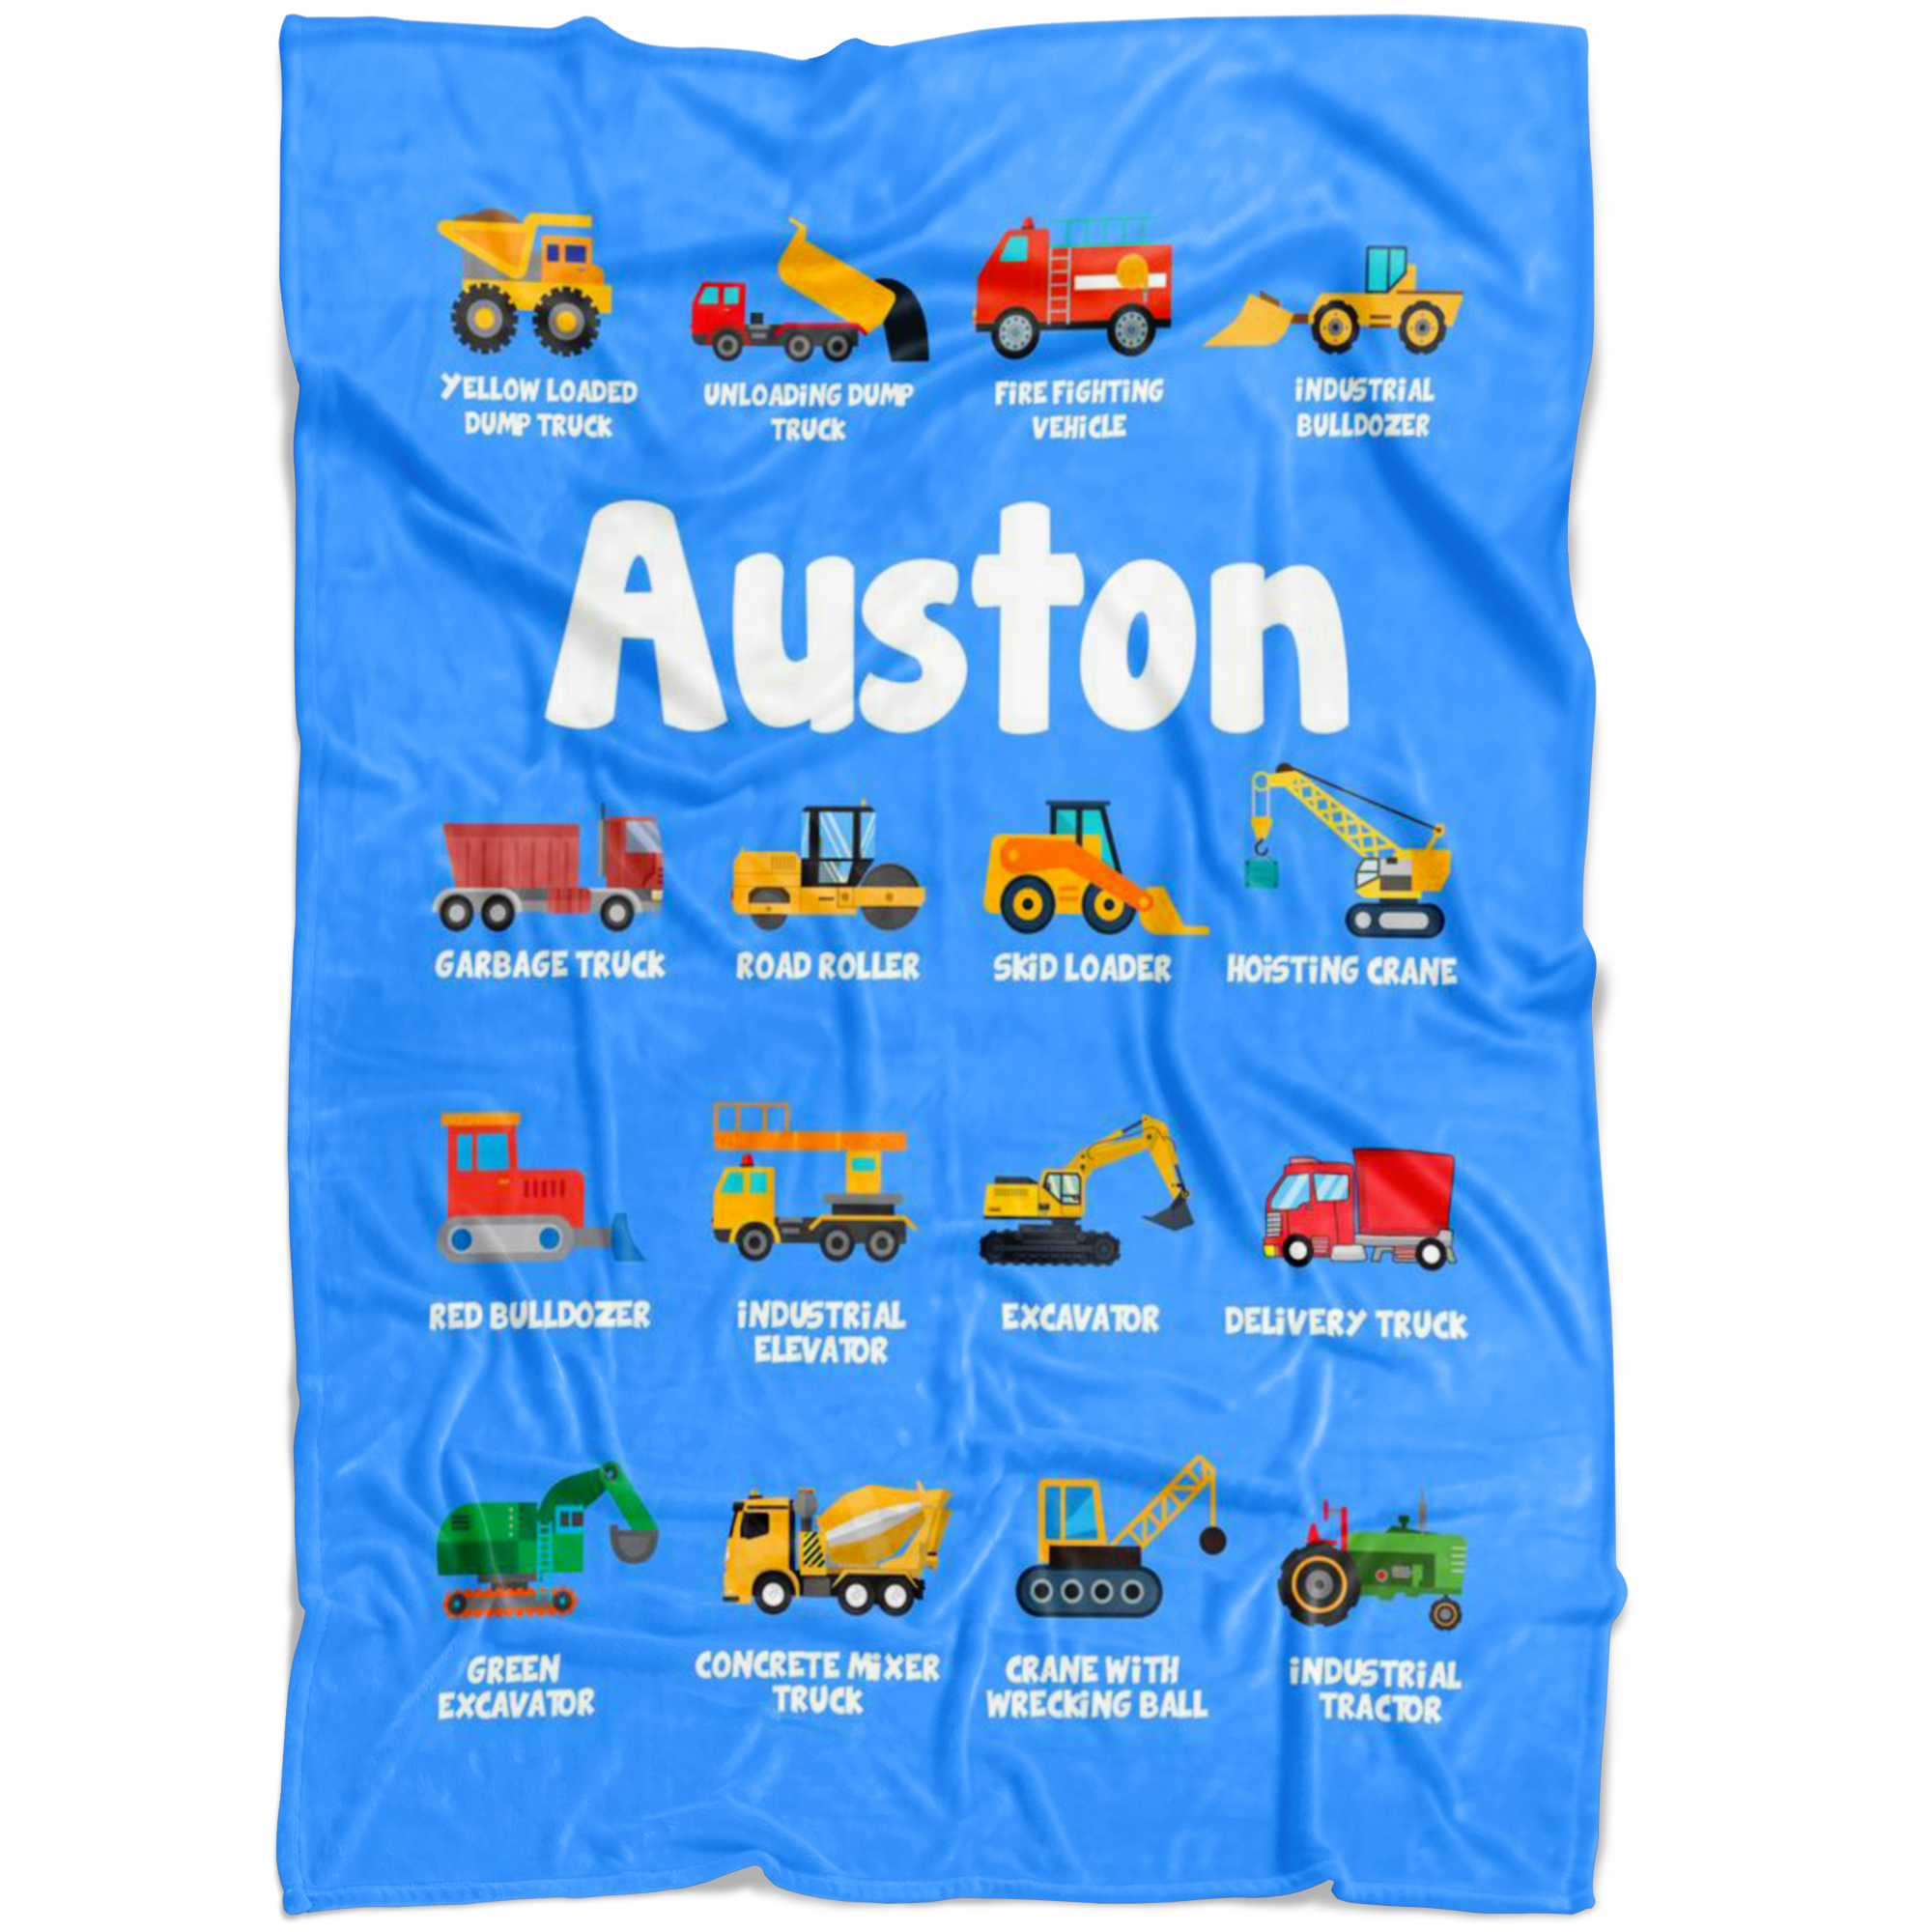 Auston Construction Blanket Blue